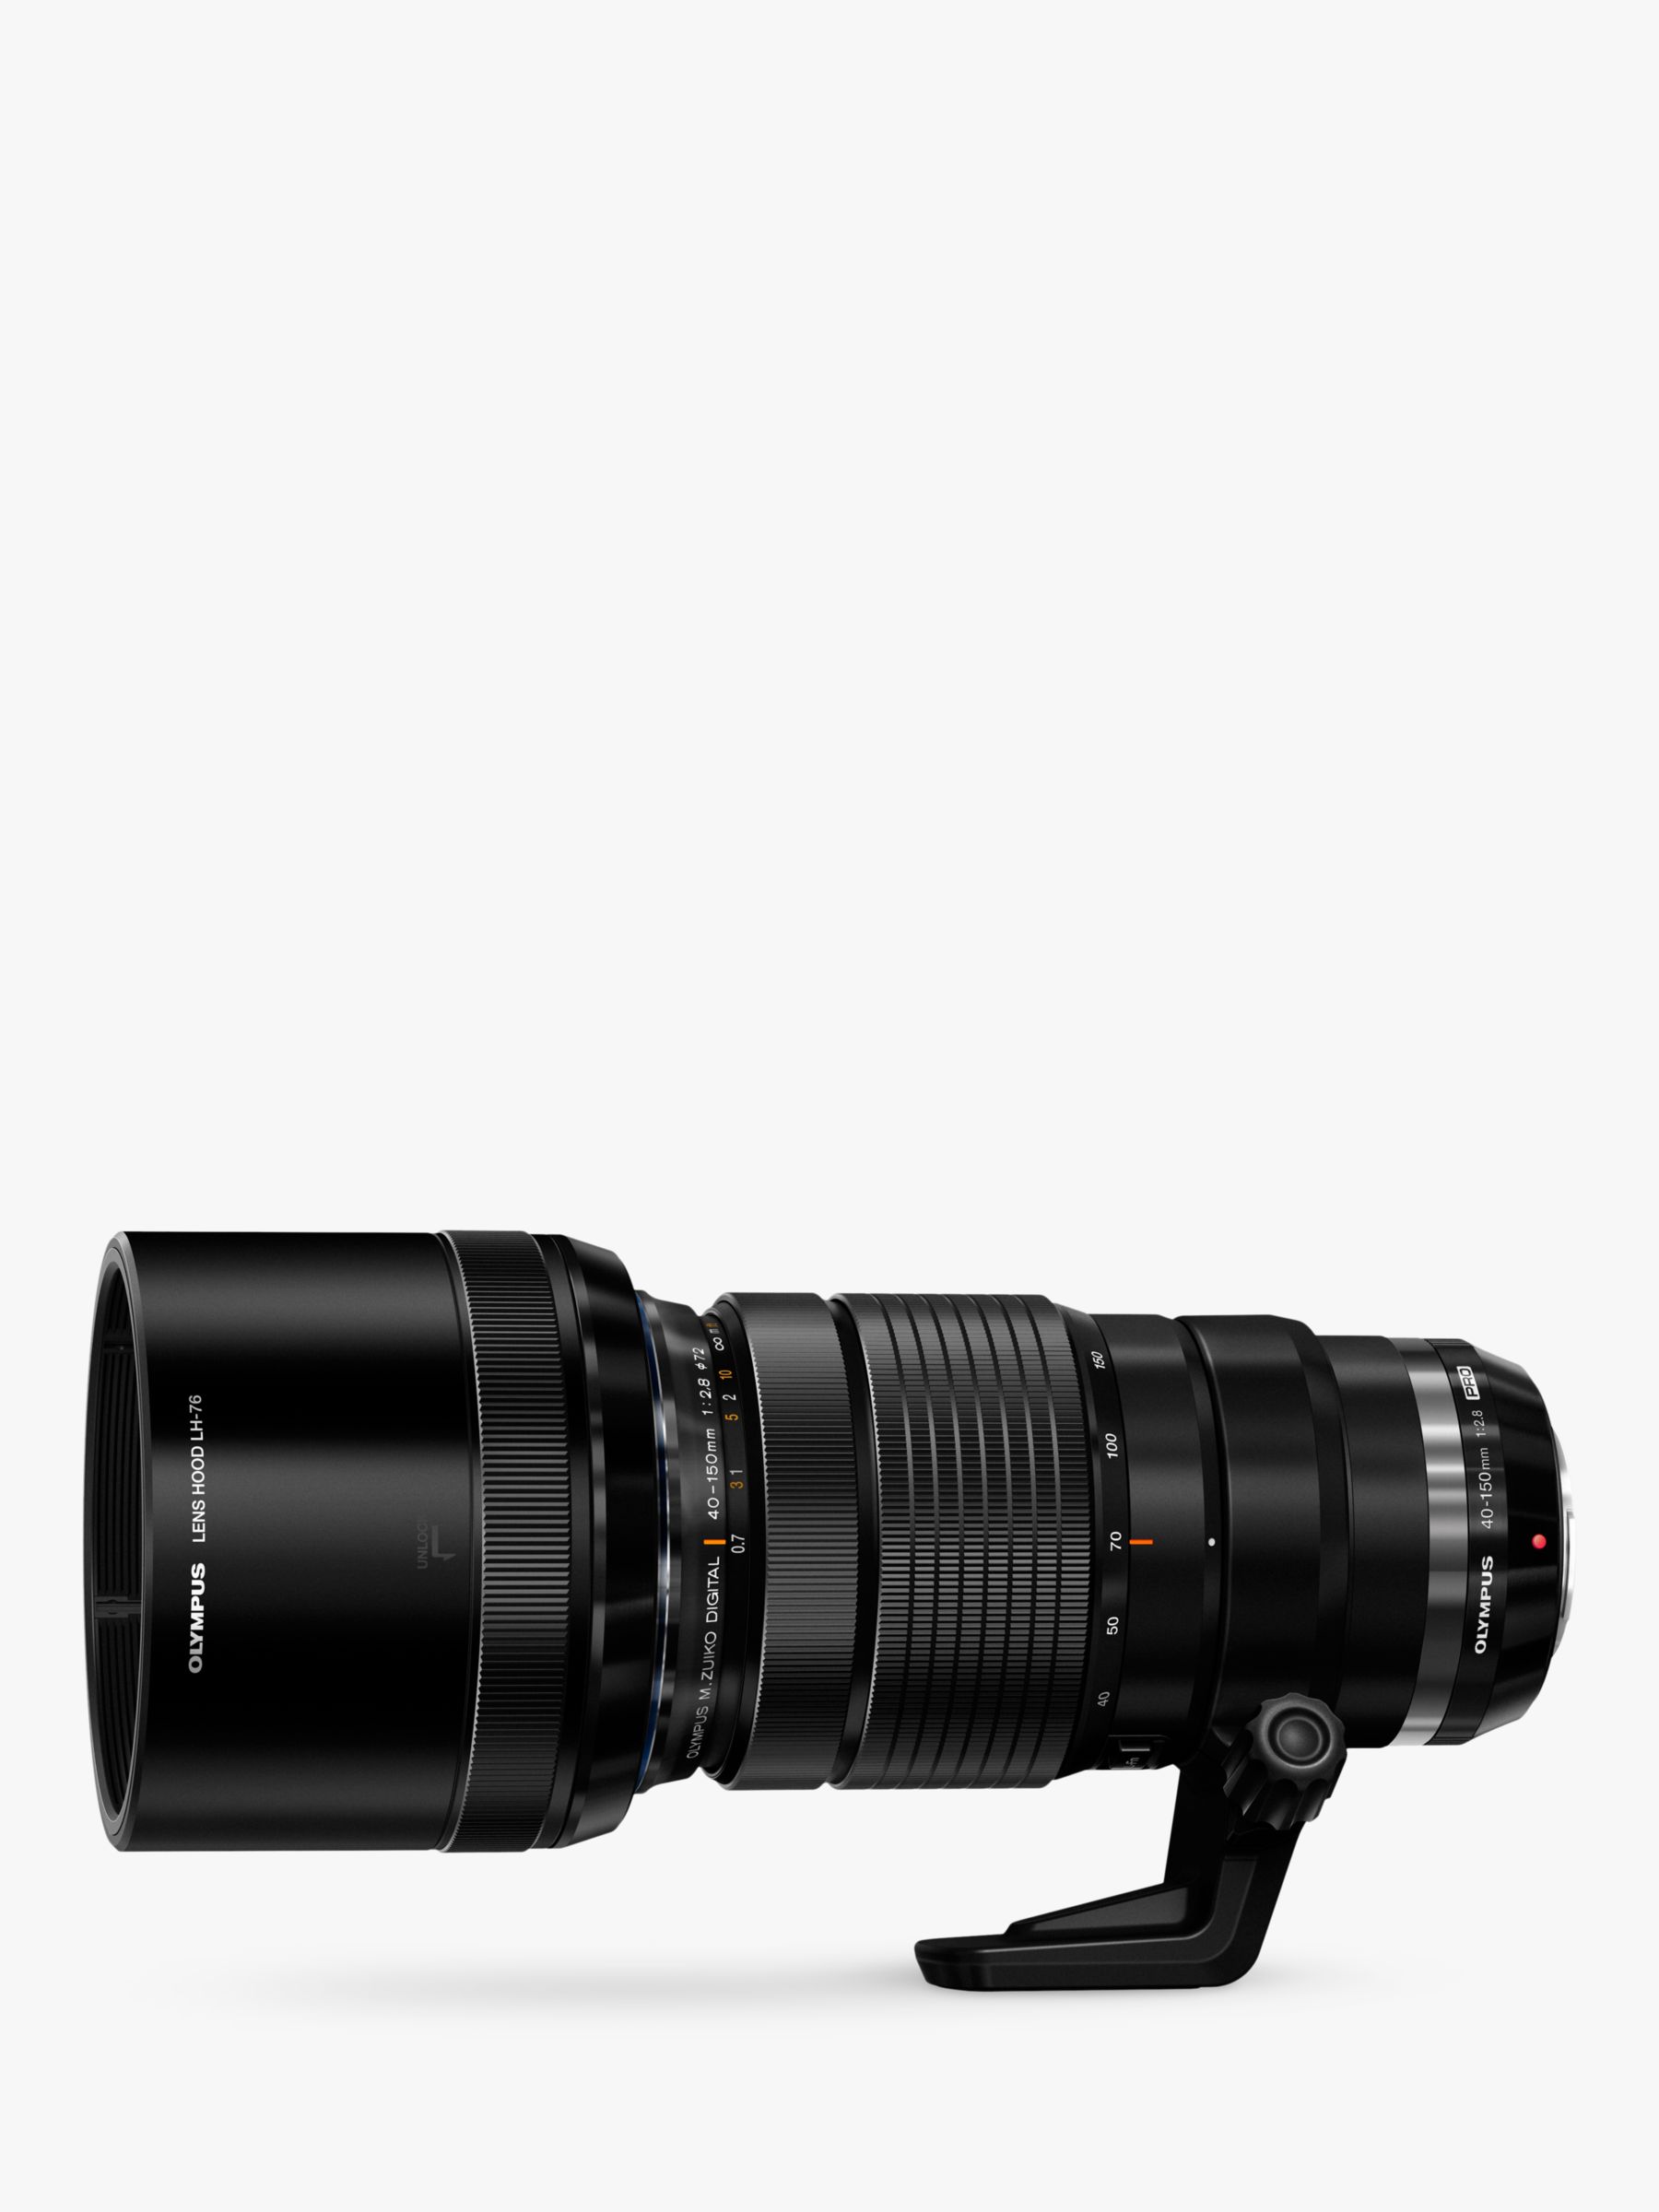 Image of Olympus MZUIKO DIGITAL 40150mm f28 ED Pro Telephoto Lens